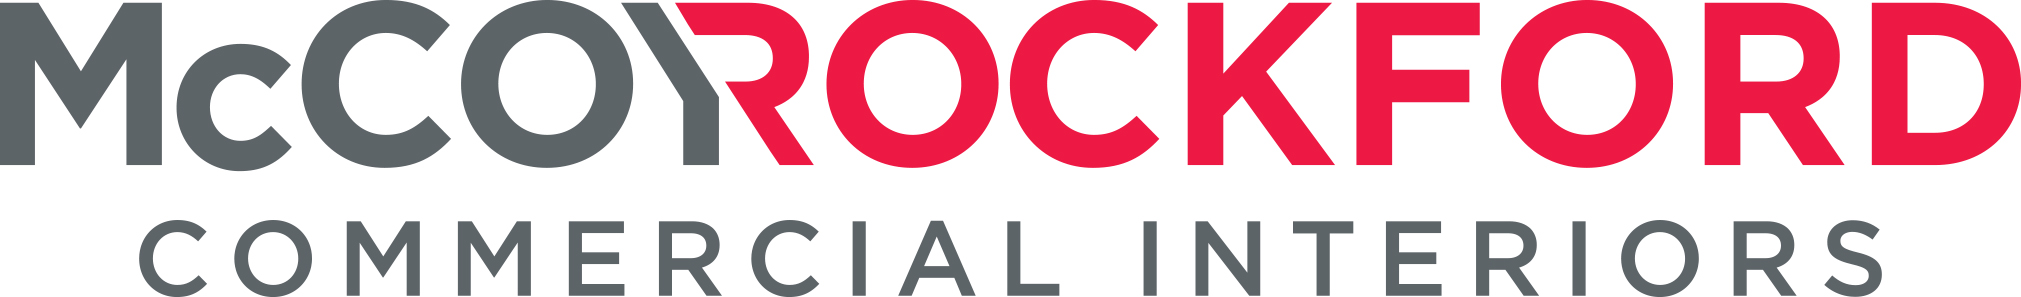 McCoy-Rockford Inc.